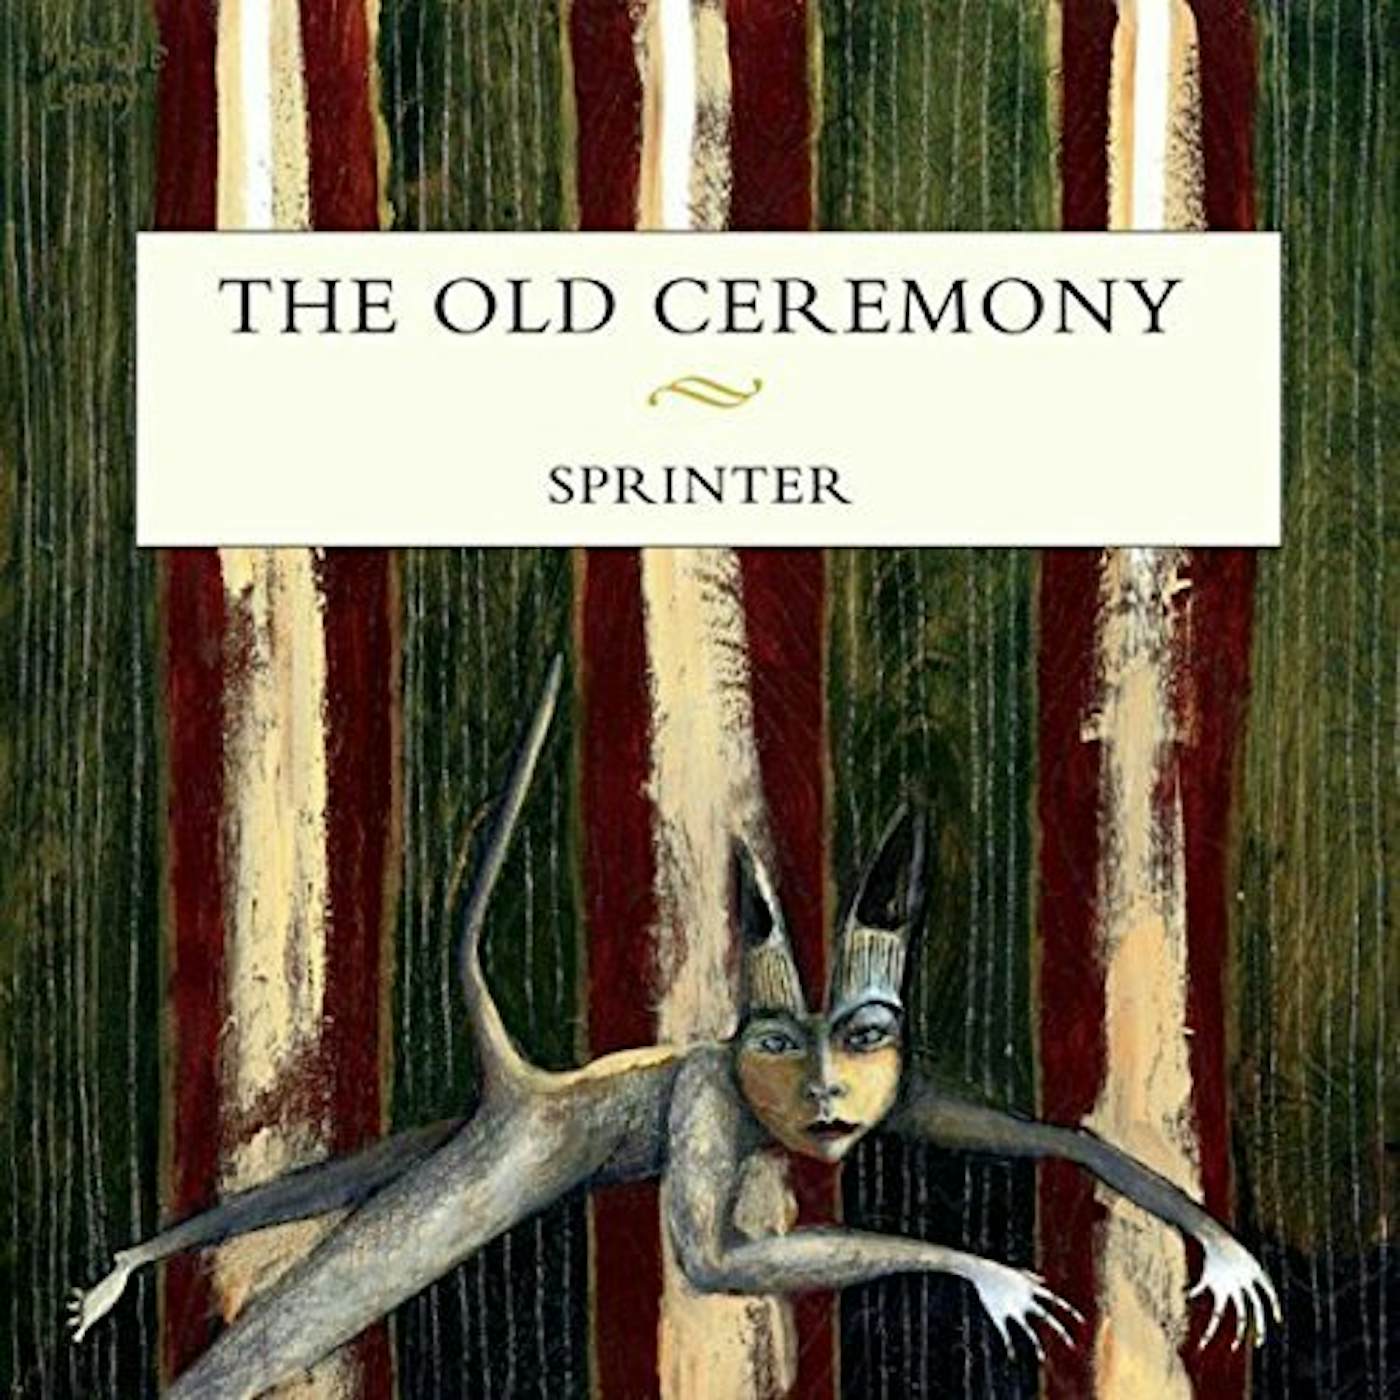 The Old Ceremony Sprinter Vinyl Record